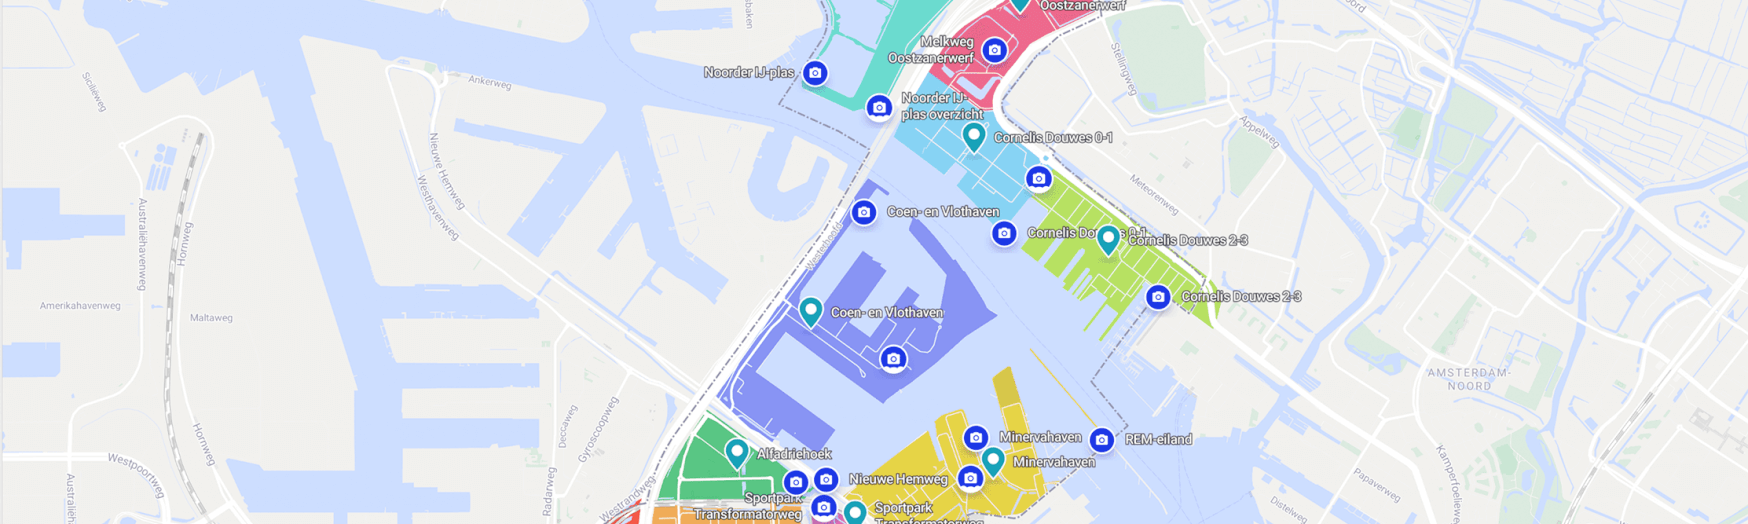 Port city of Amsterdam